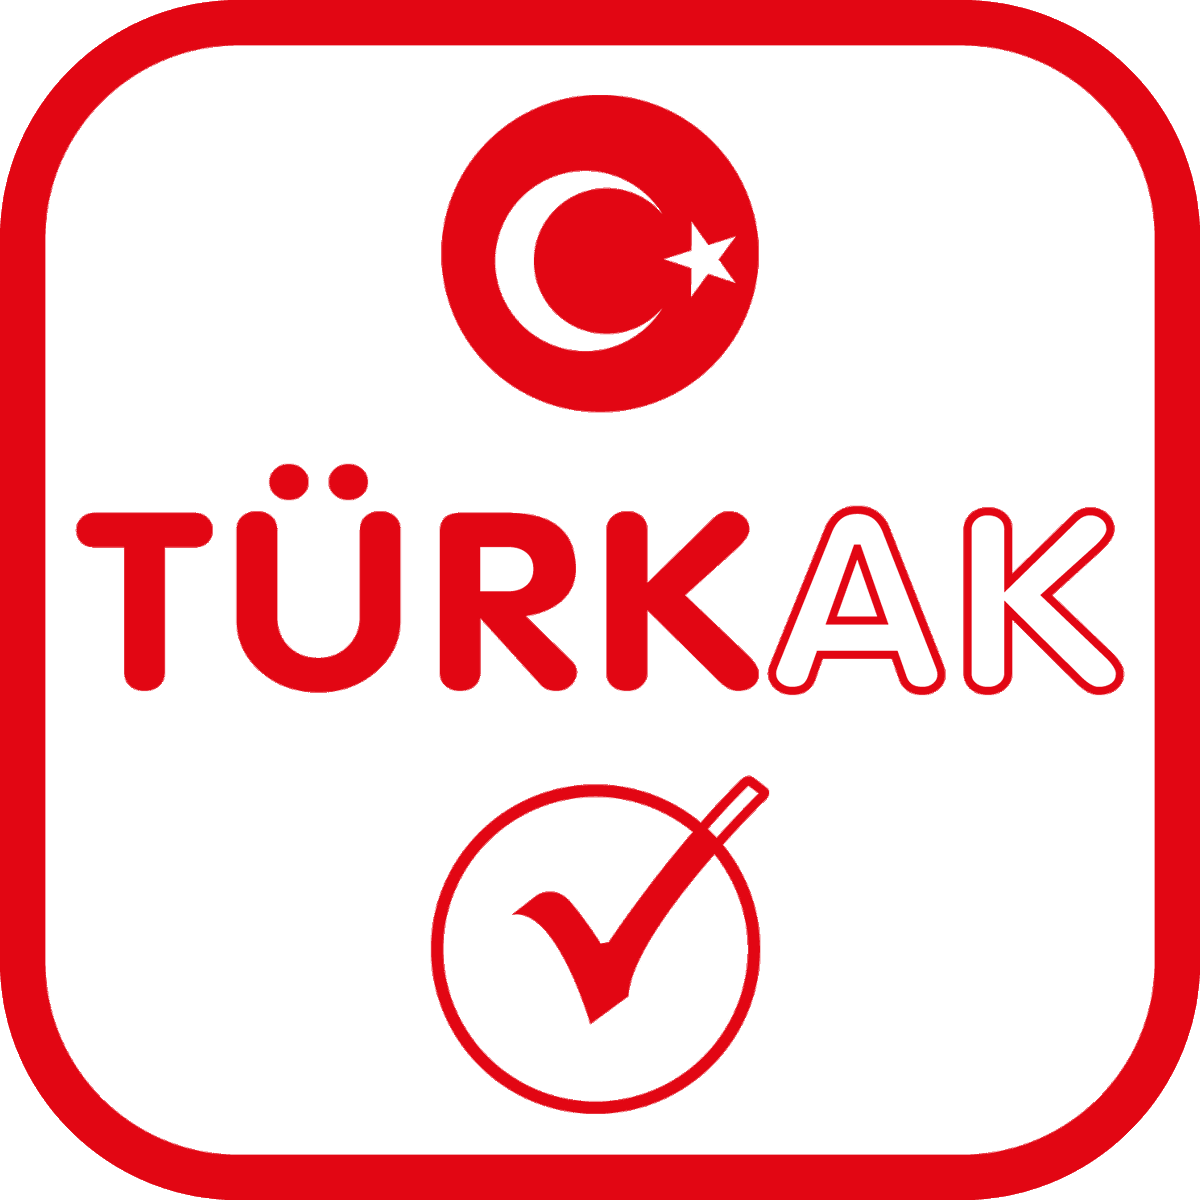 TURKAK-Danisma-Kurulu-Logo.png (36 KB)